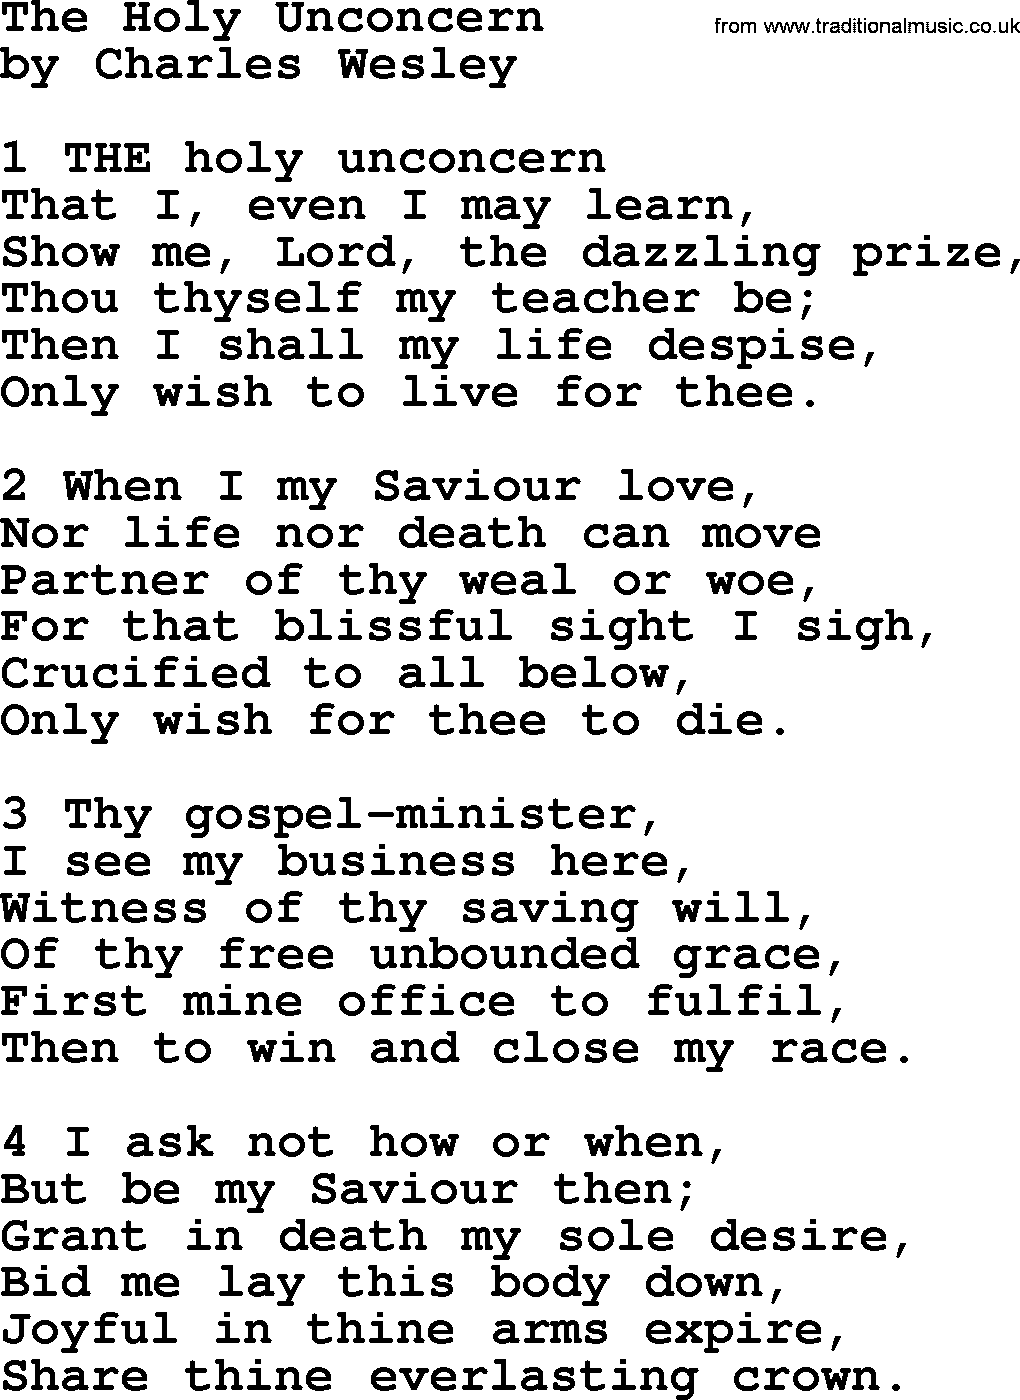 Charles Wesley hymn: The Holy Unconcern, lyrics